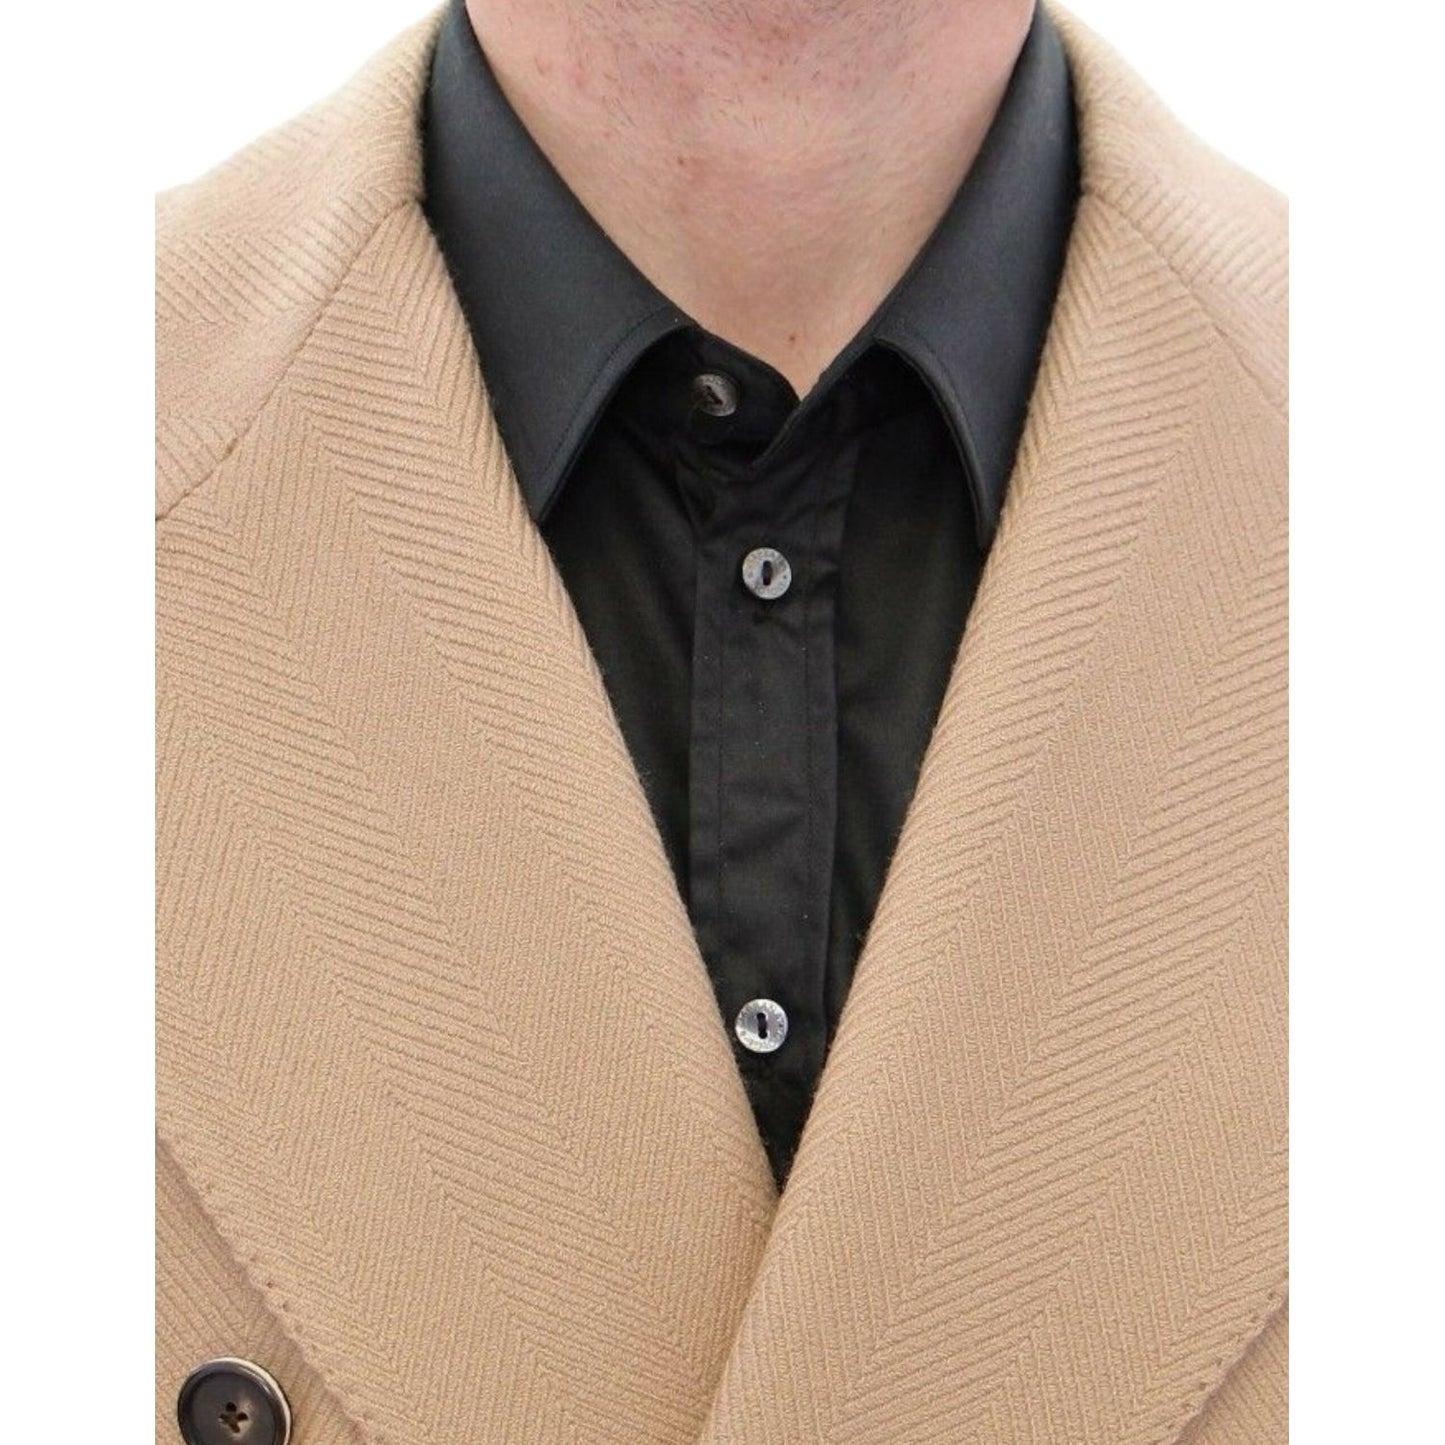 Dolce & Gabbana Elegant Beige Formal Wool Coat Coats & Jackets beige-double-breasted-coat-jacket